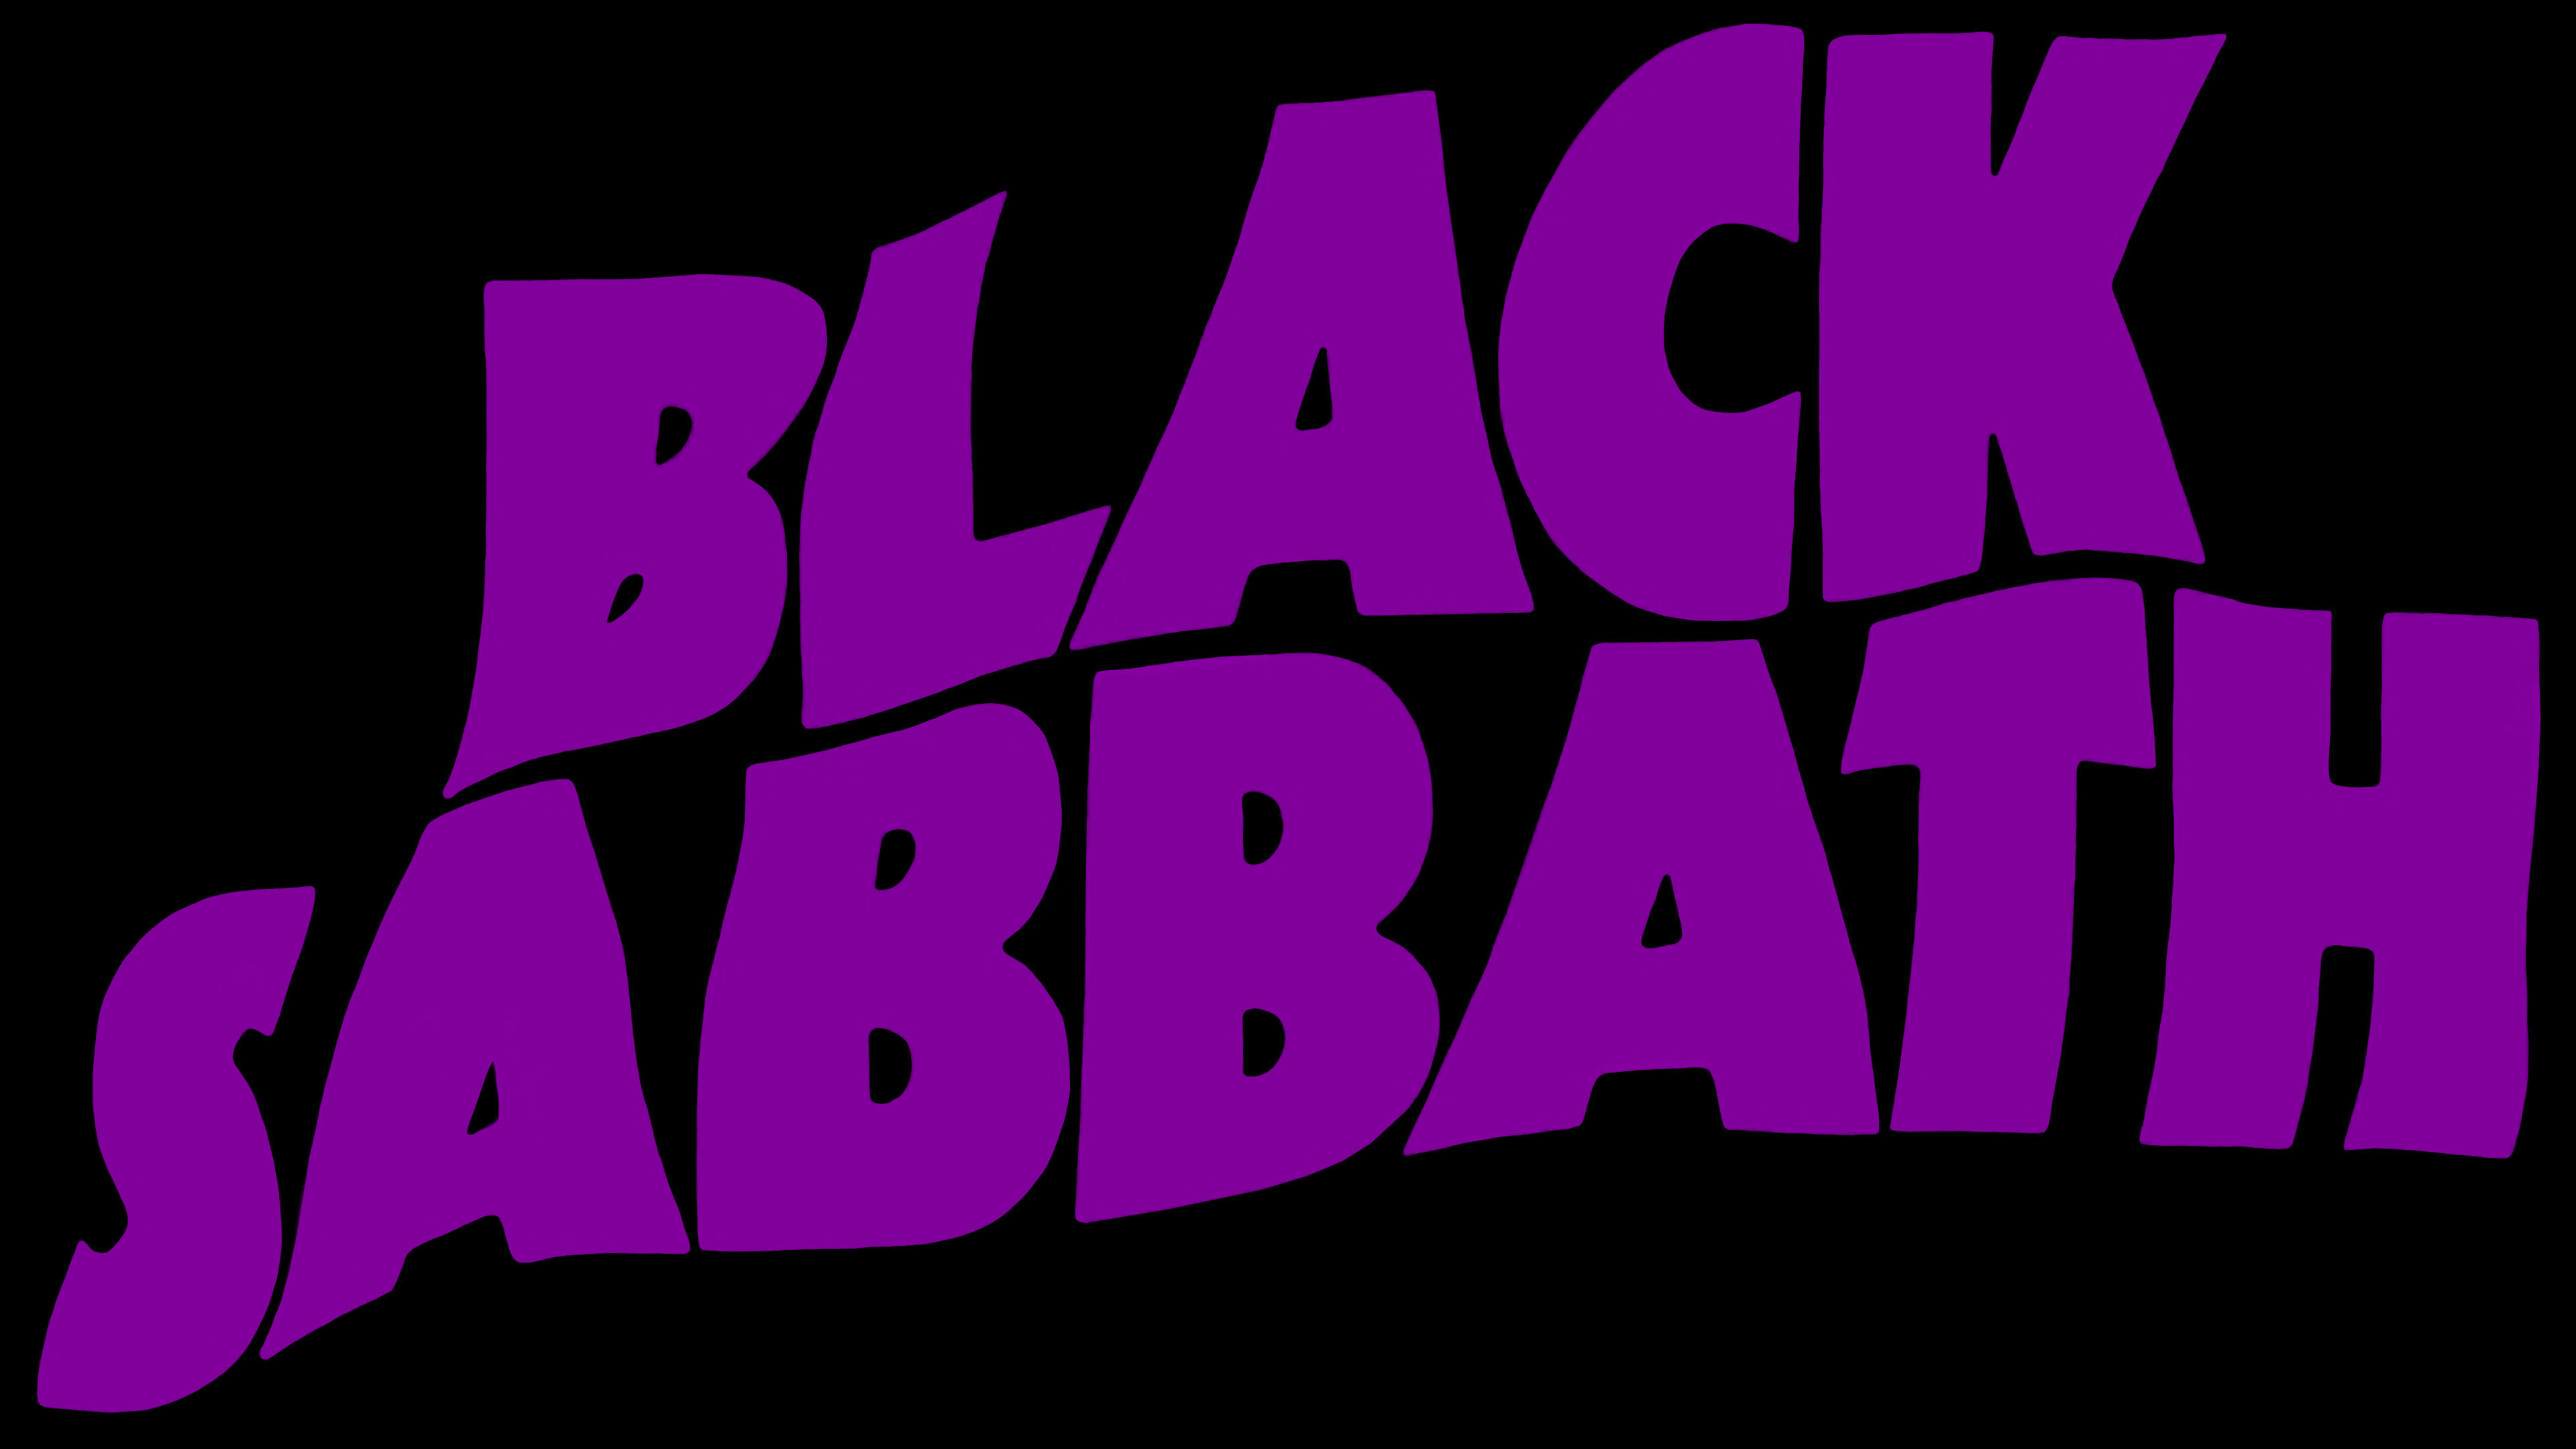 3840x2160 Music - Black Sabbath Heavy Metal Wallpaper